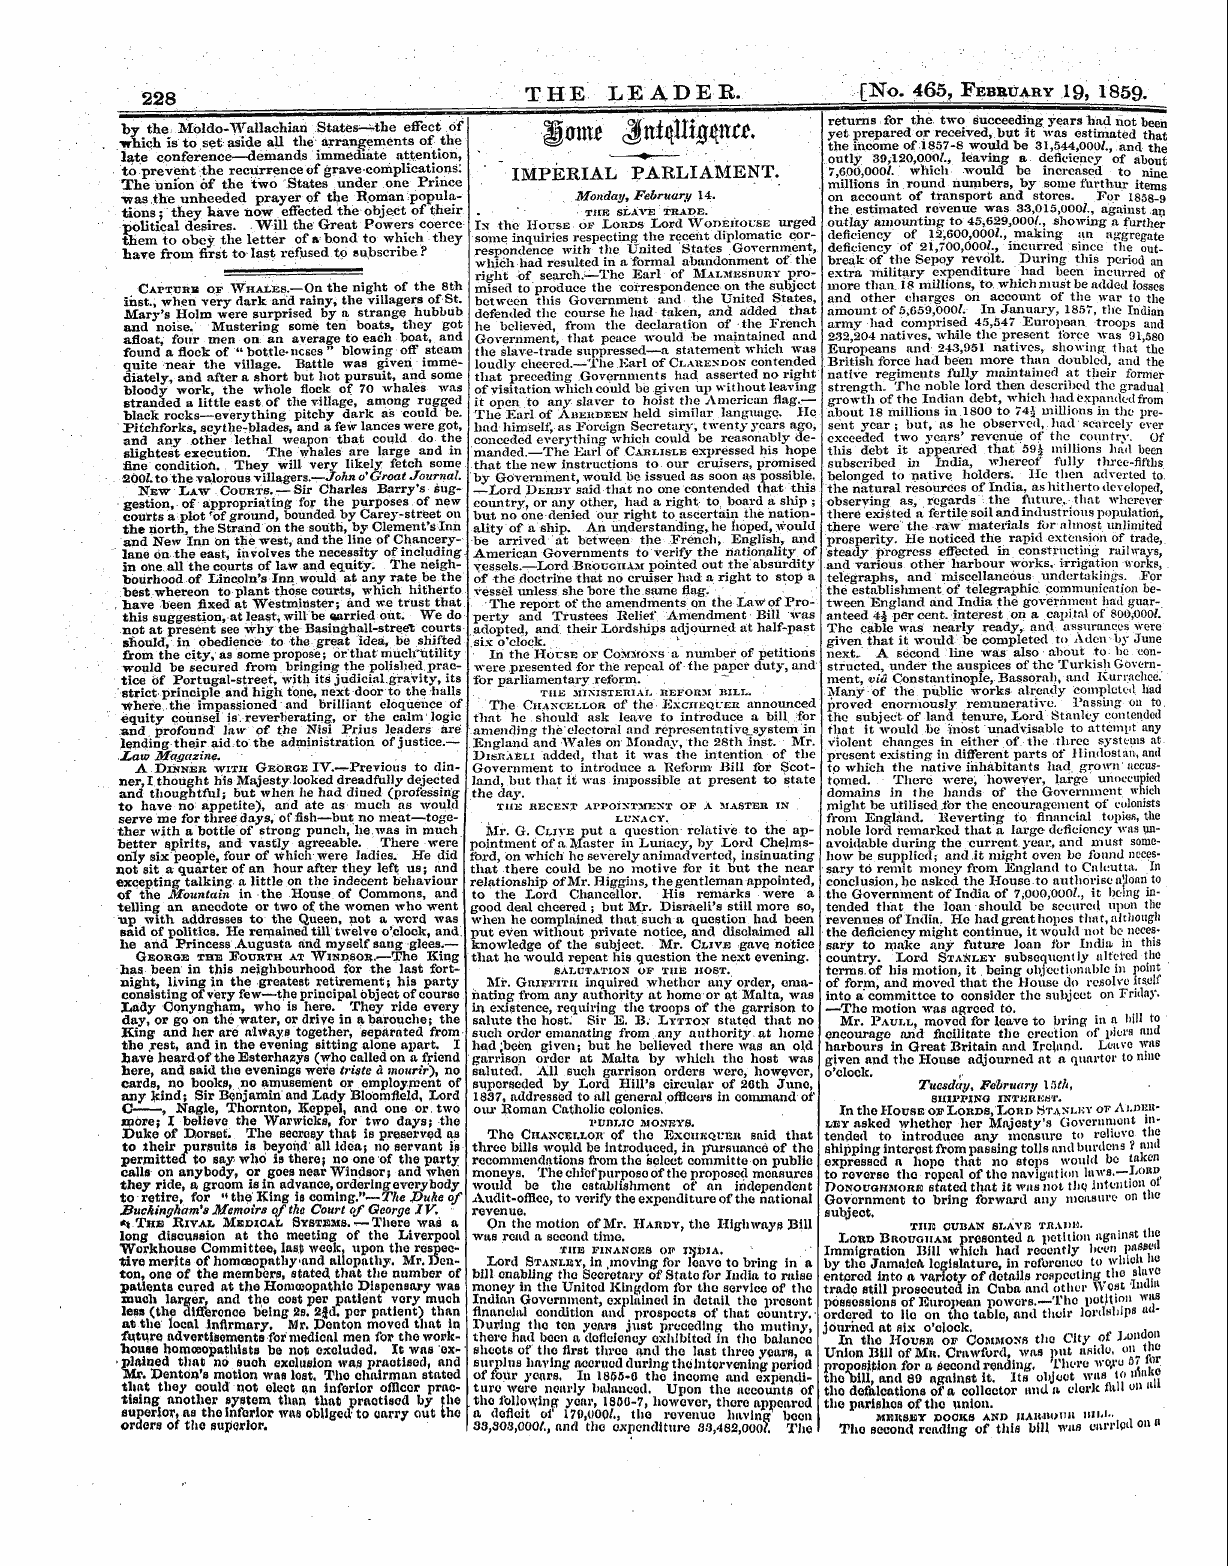 Leader (1850-1860): jS F Y, 1st edition - Gome &Ni0gwu ^/ V^V 1 - V T